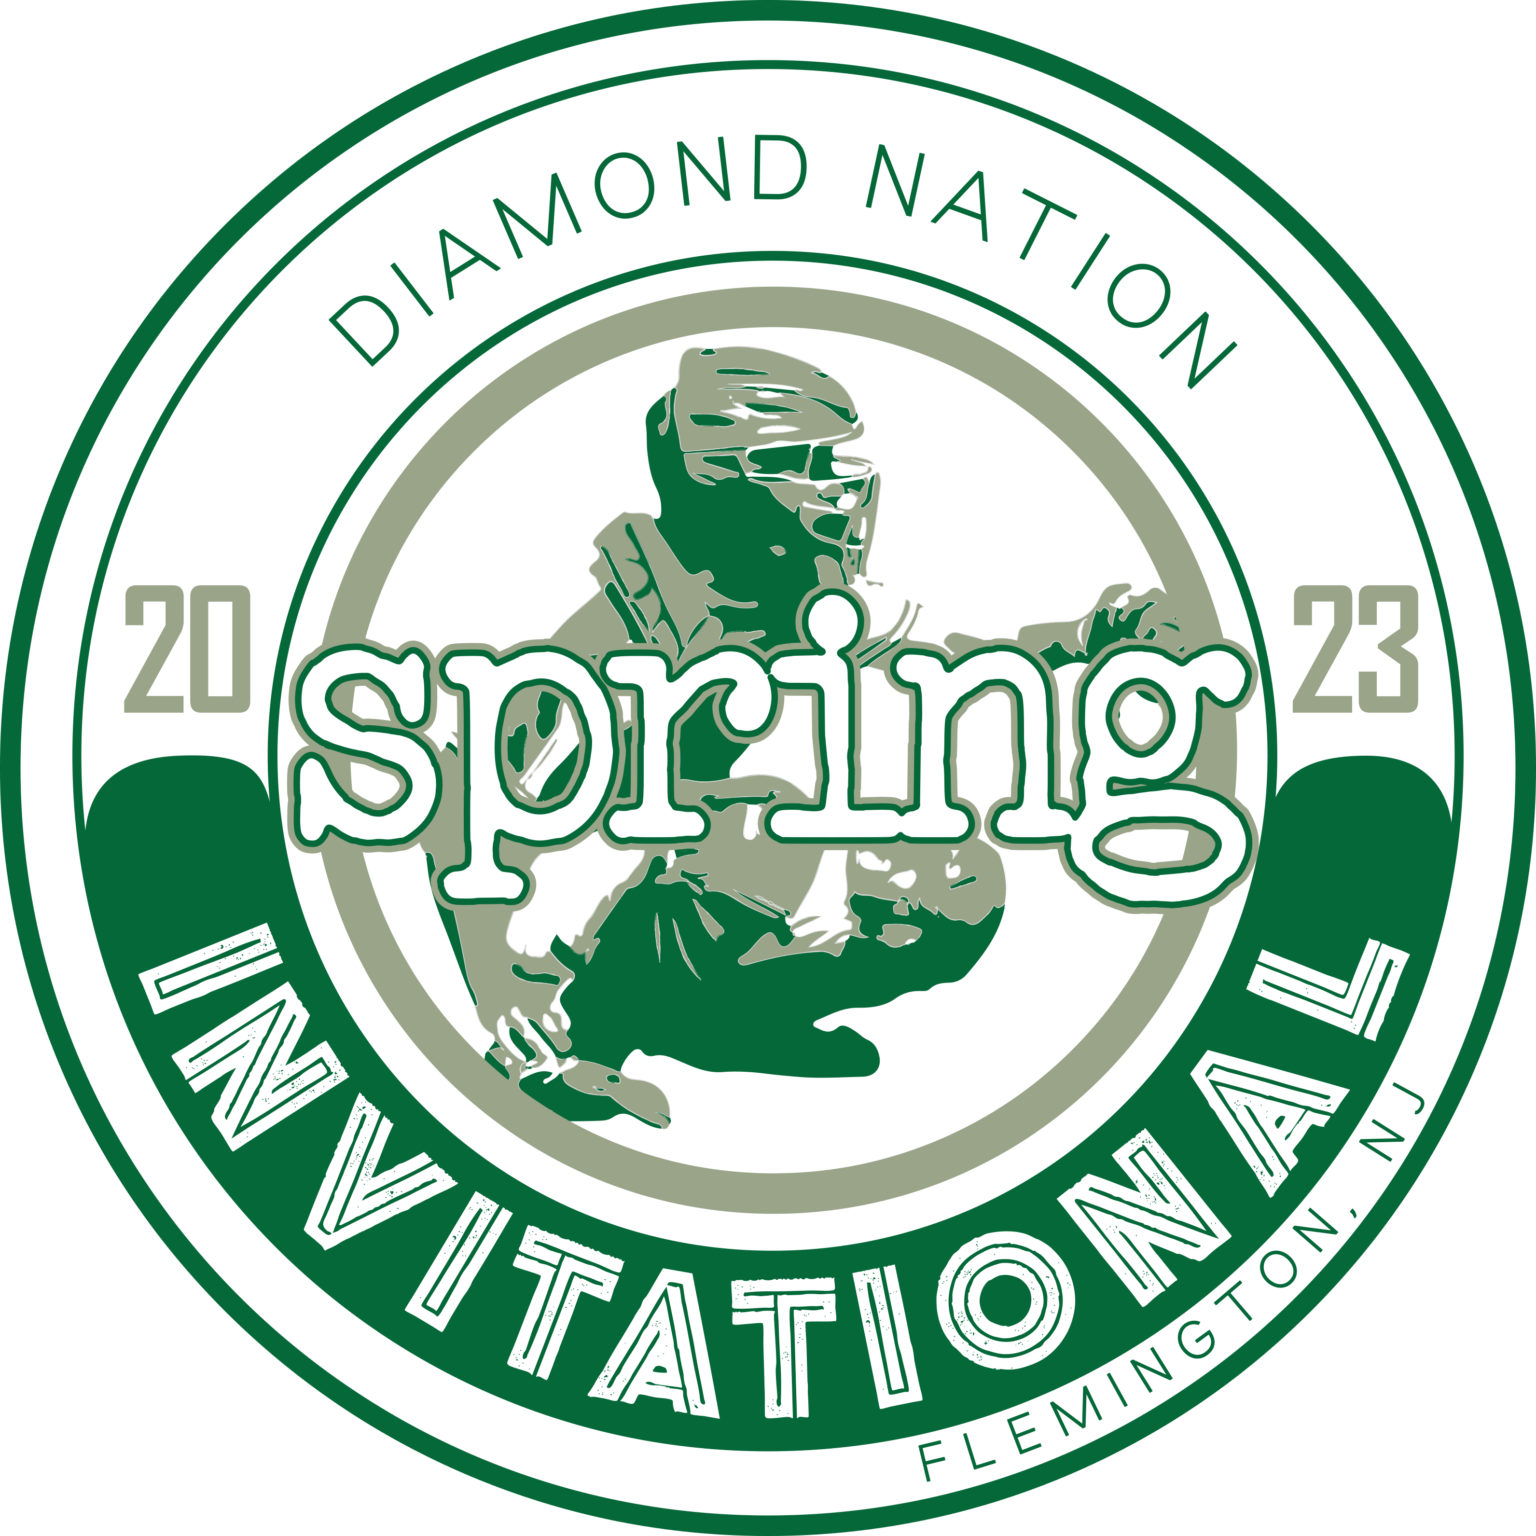 Tournaments Archive Diamond Nation